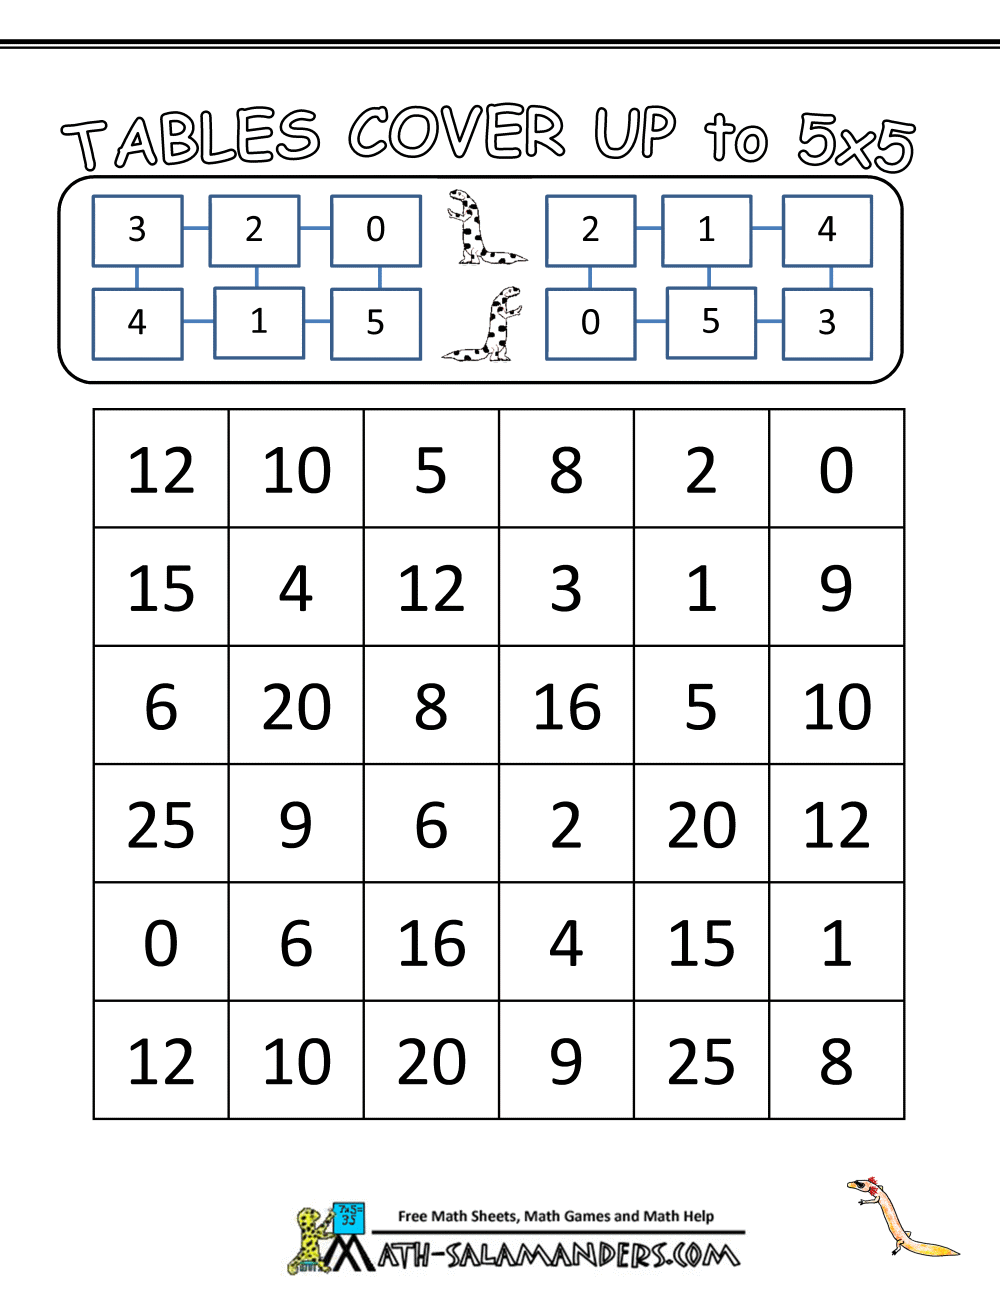 3rd grade math games pdf